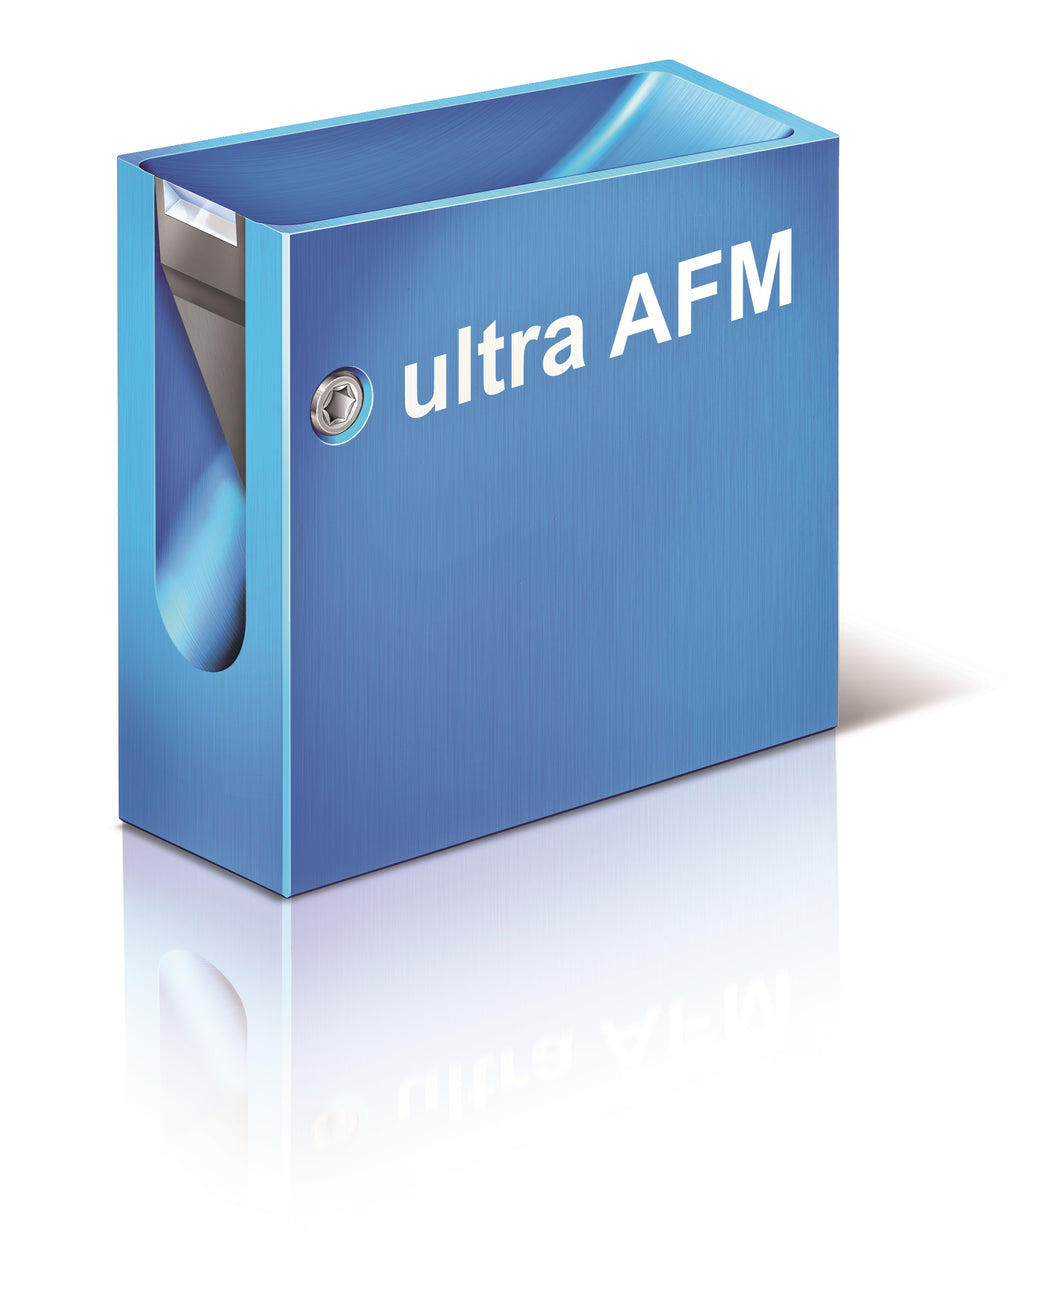 ultra AFM/cryo AFM